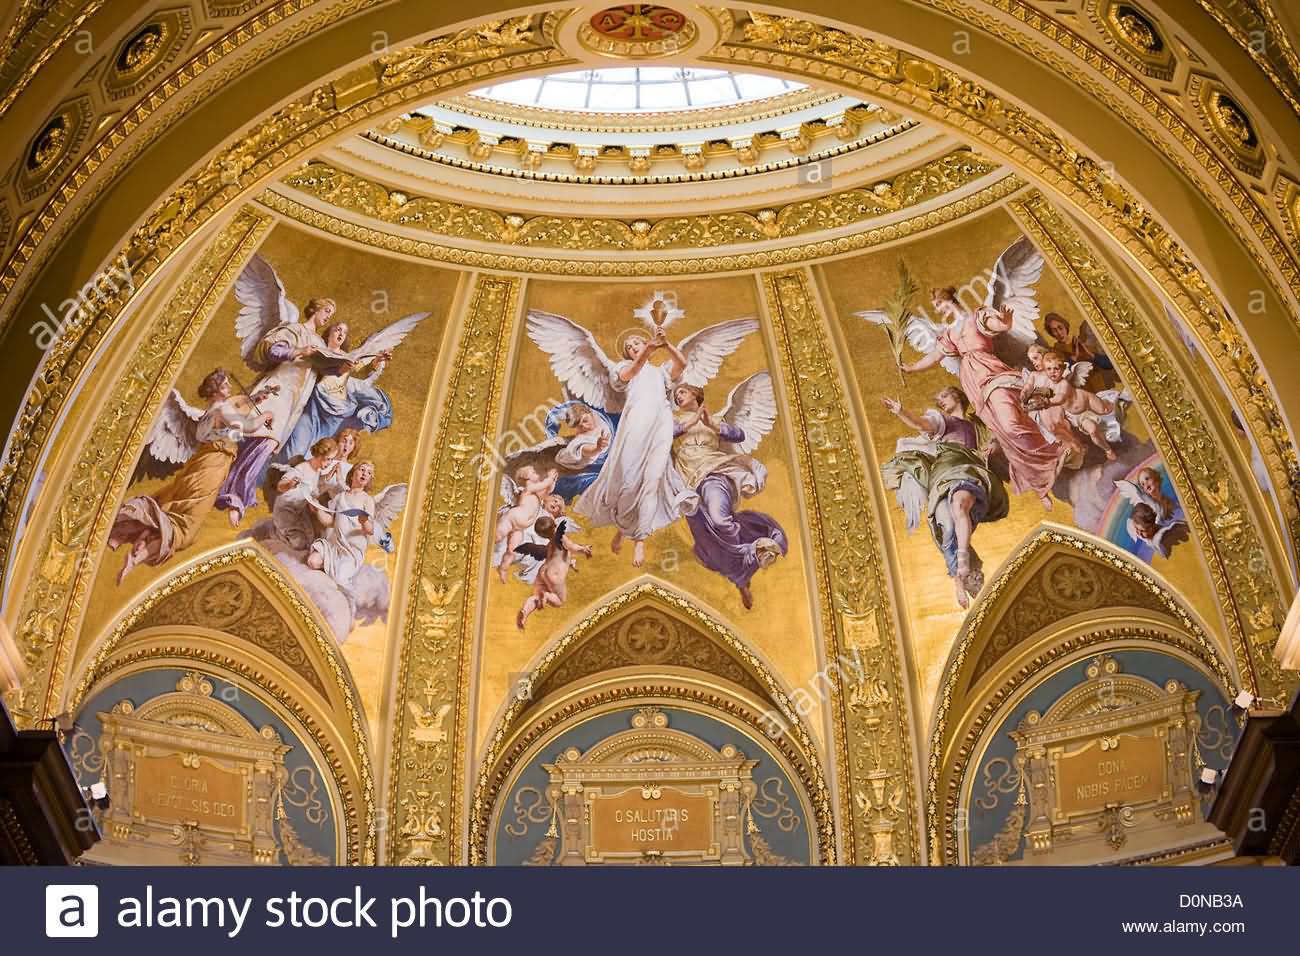 Angels And Cherubs Mosaic Inside The Saint Stephen's Basilica